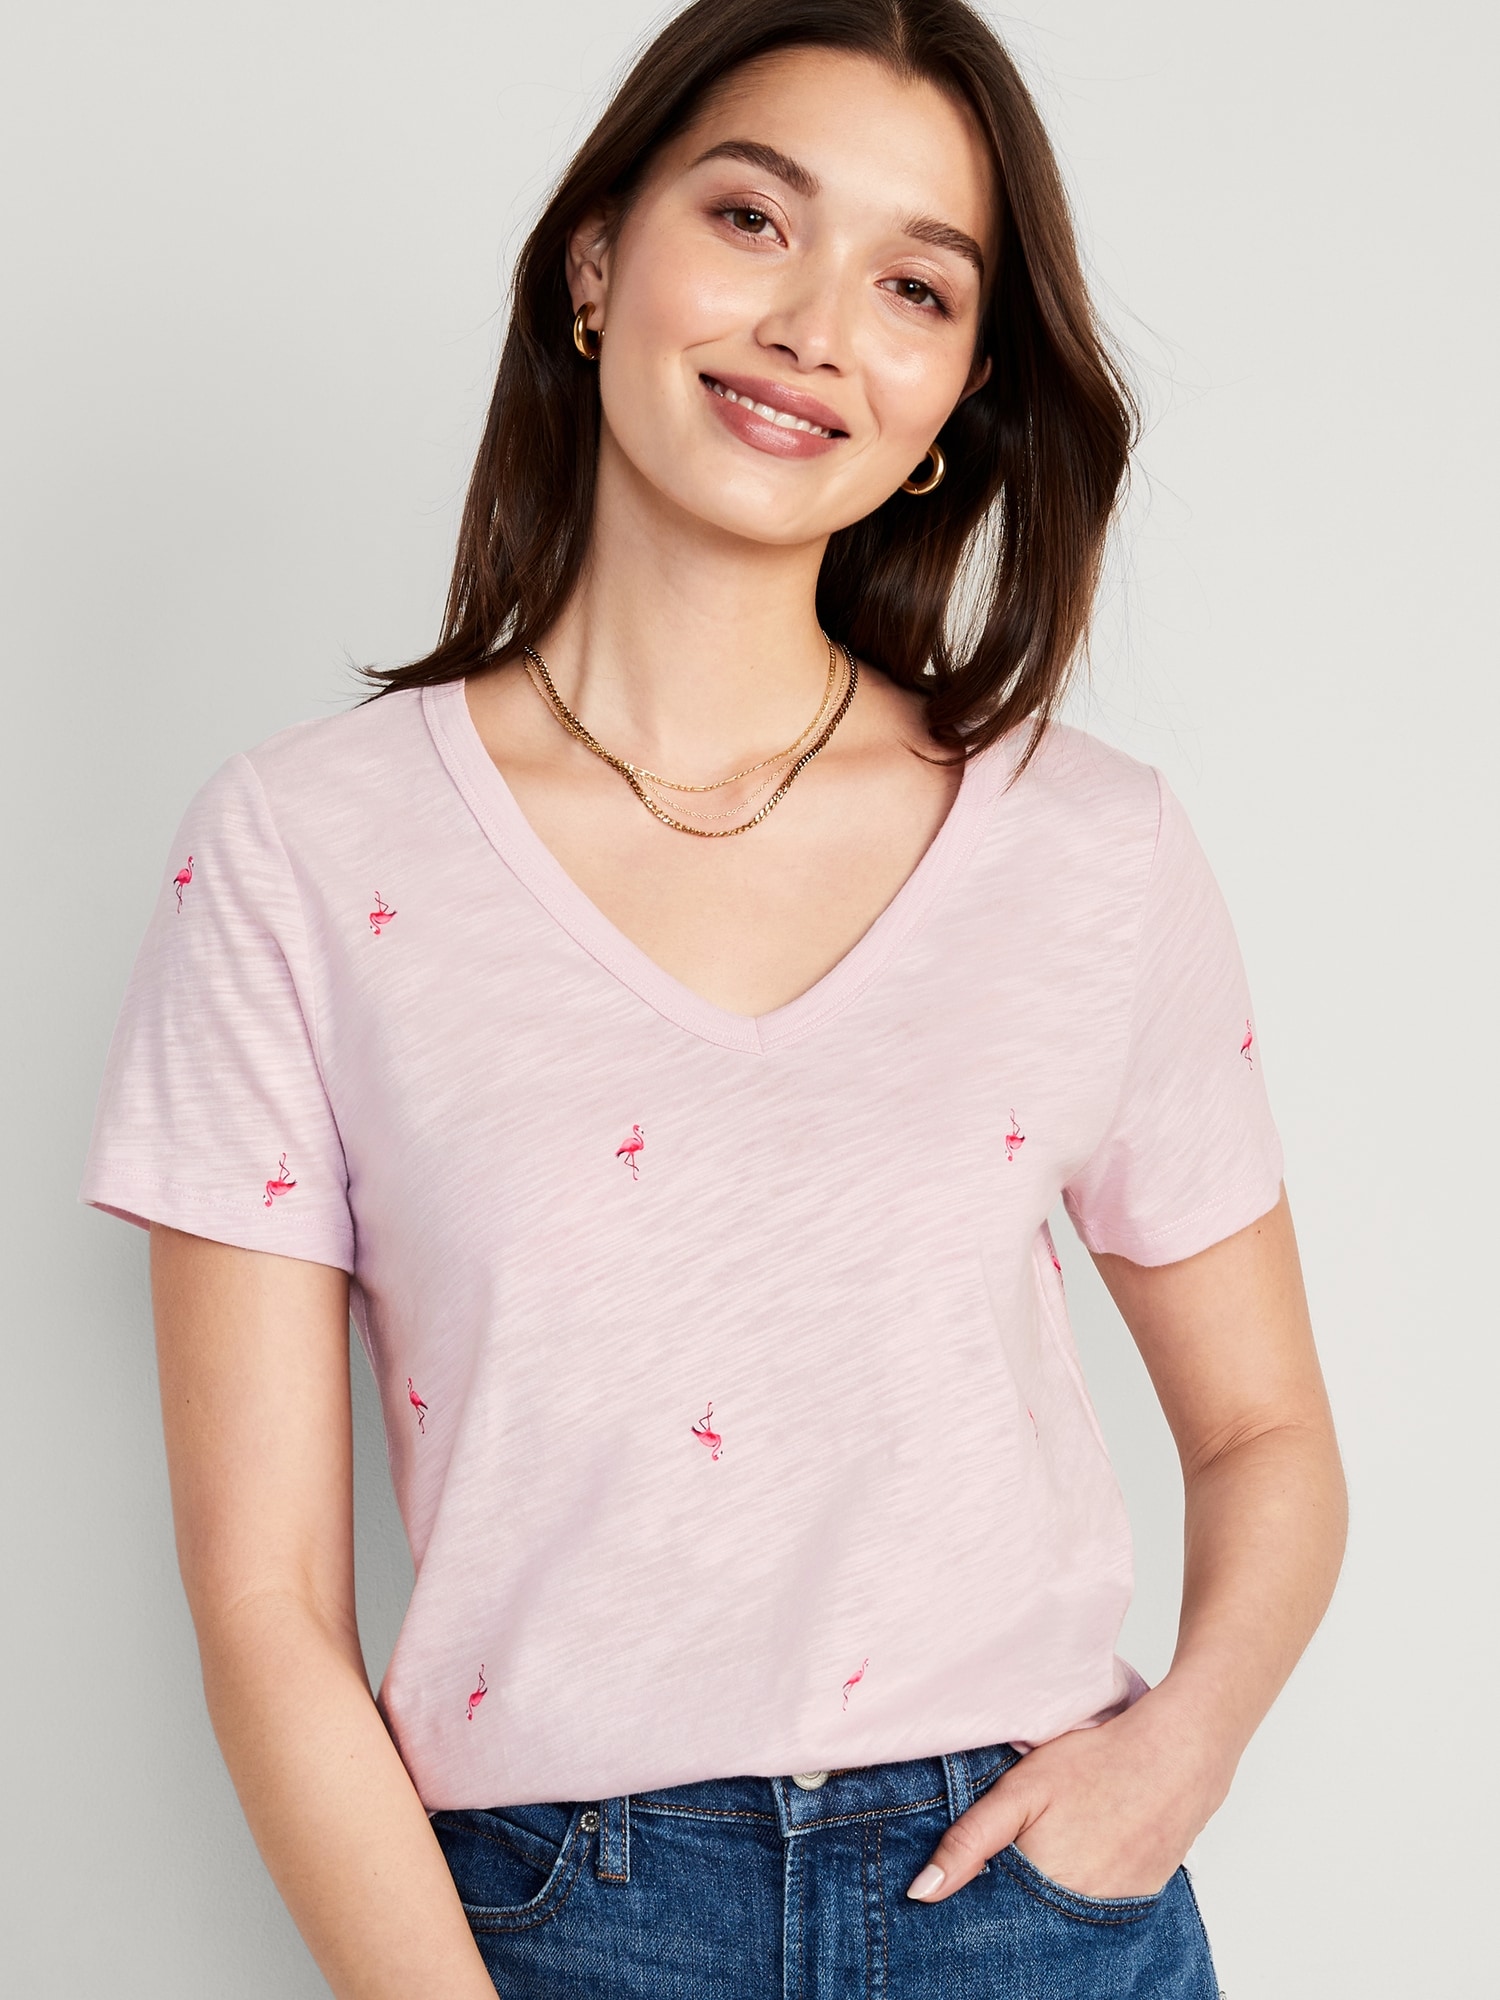 Old Navy EveryWear Printed Slub-Knit T-Shirt for Women pink. 1